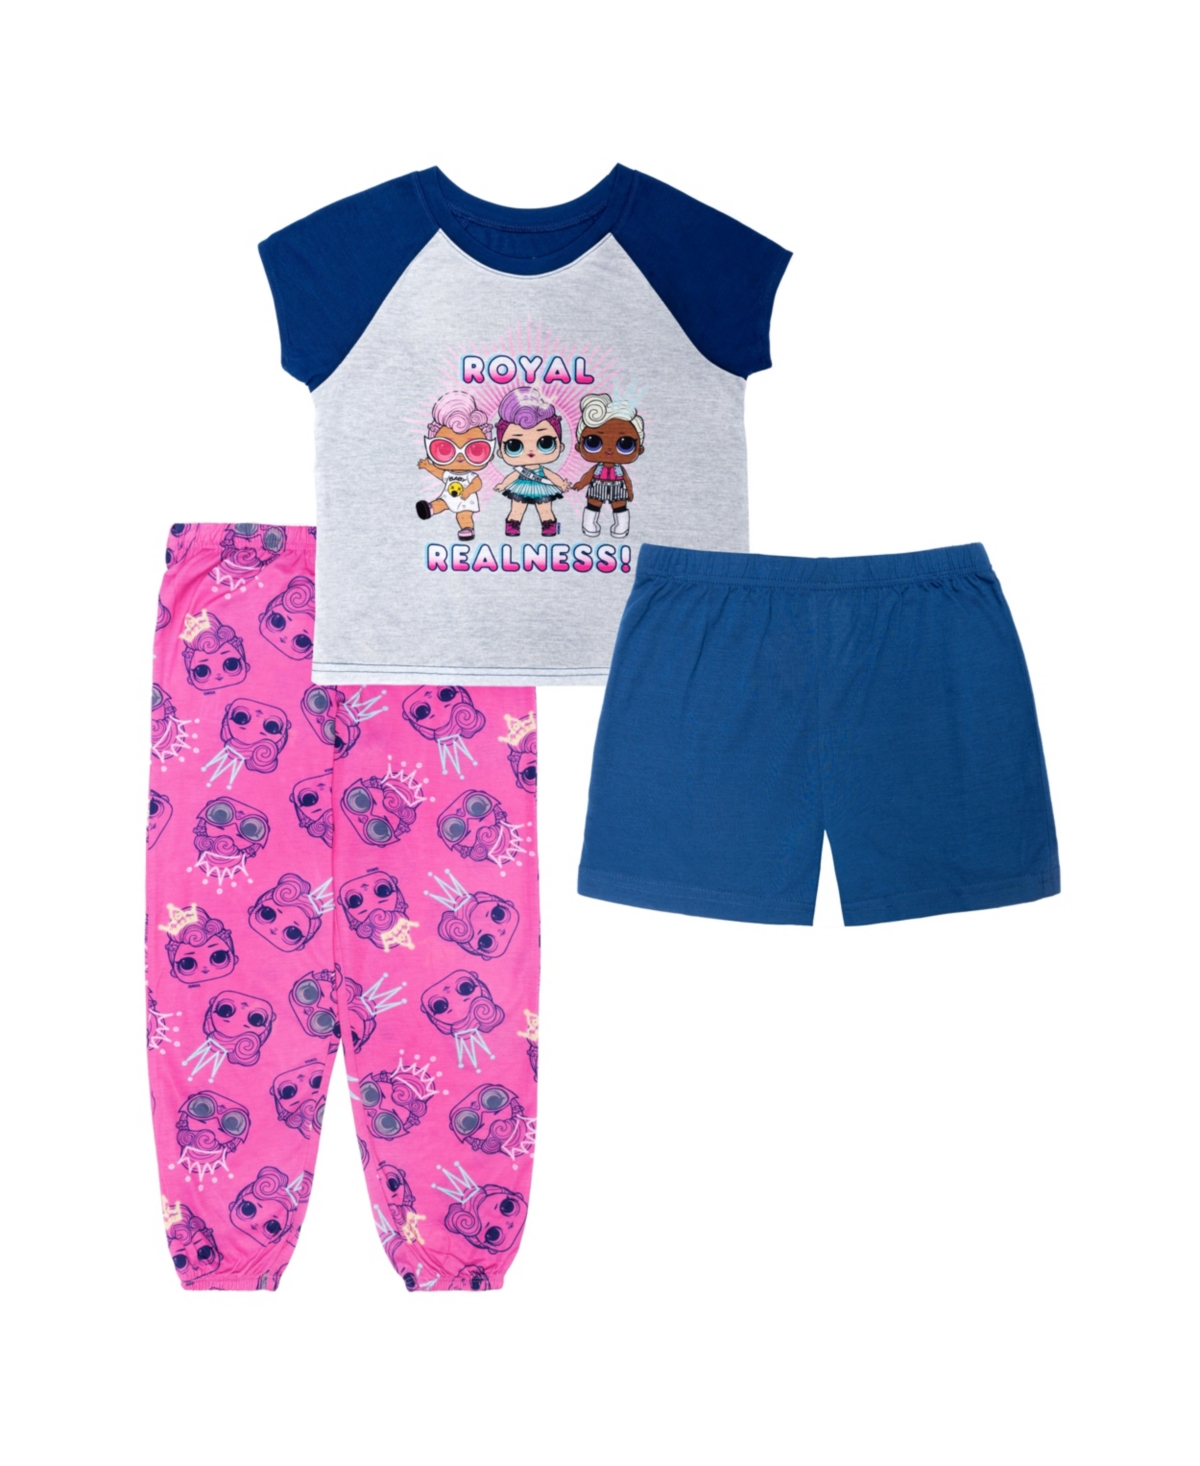 Lol Surprise Little Girls Pajama Set, 3 Piece In Assorted